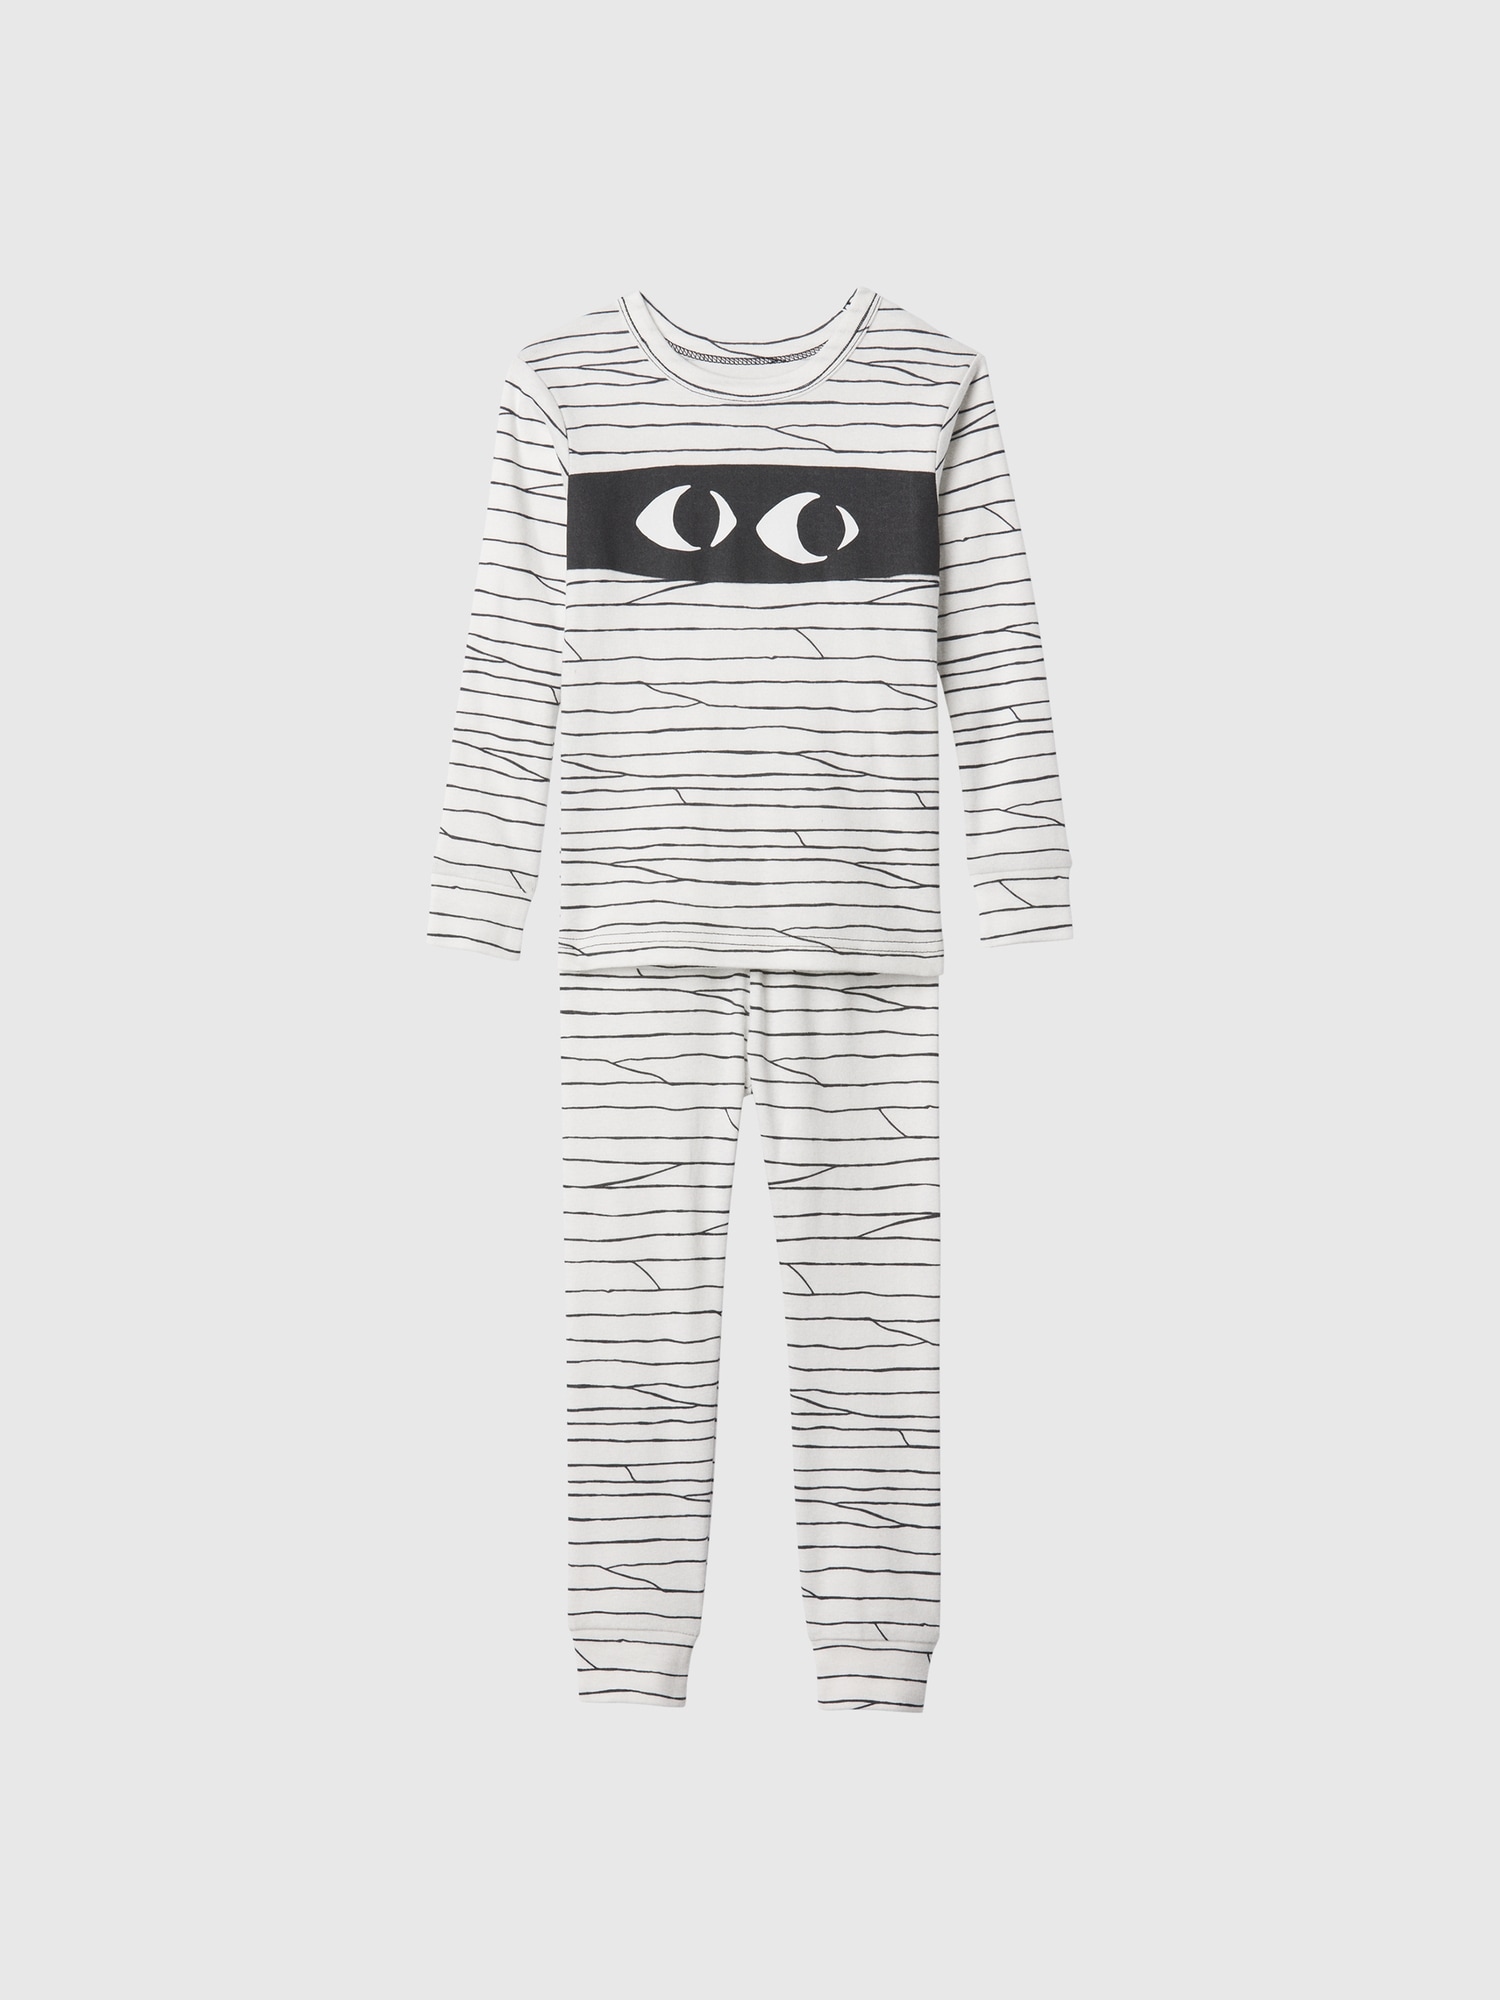 Kids & babyGap 100% Organic Cotton Mummy PJ Set